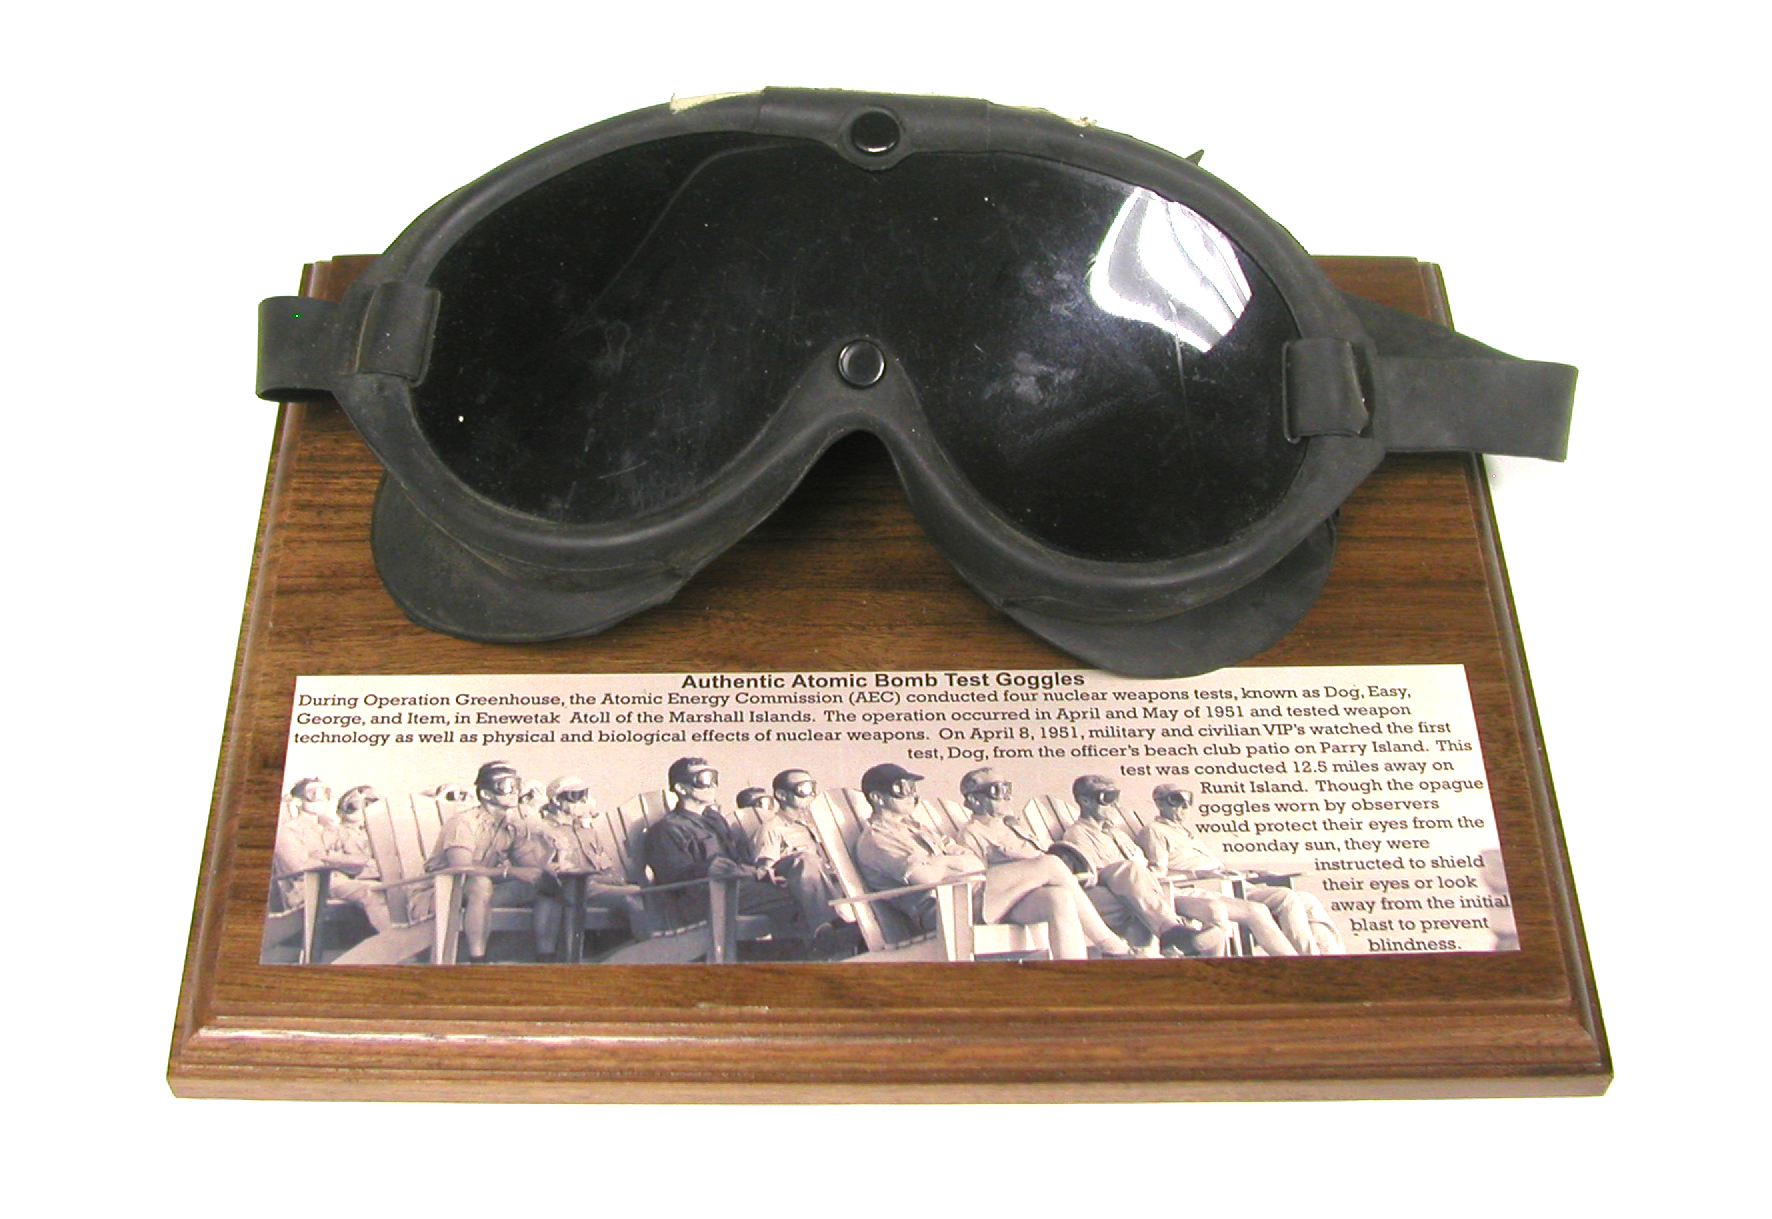 Atomic goggles